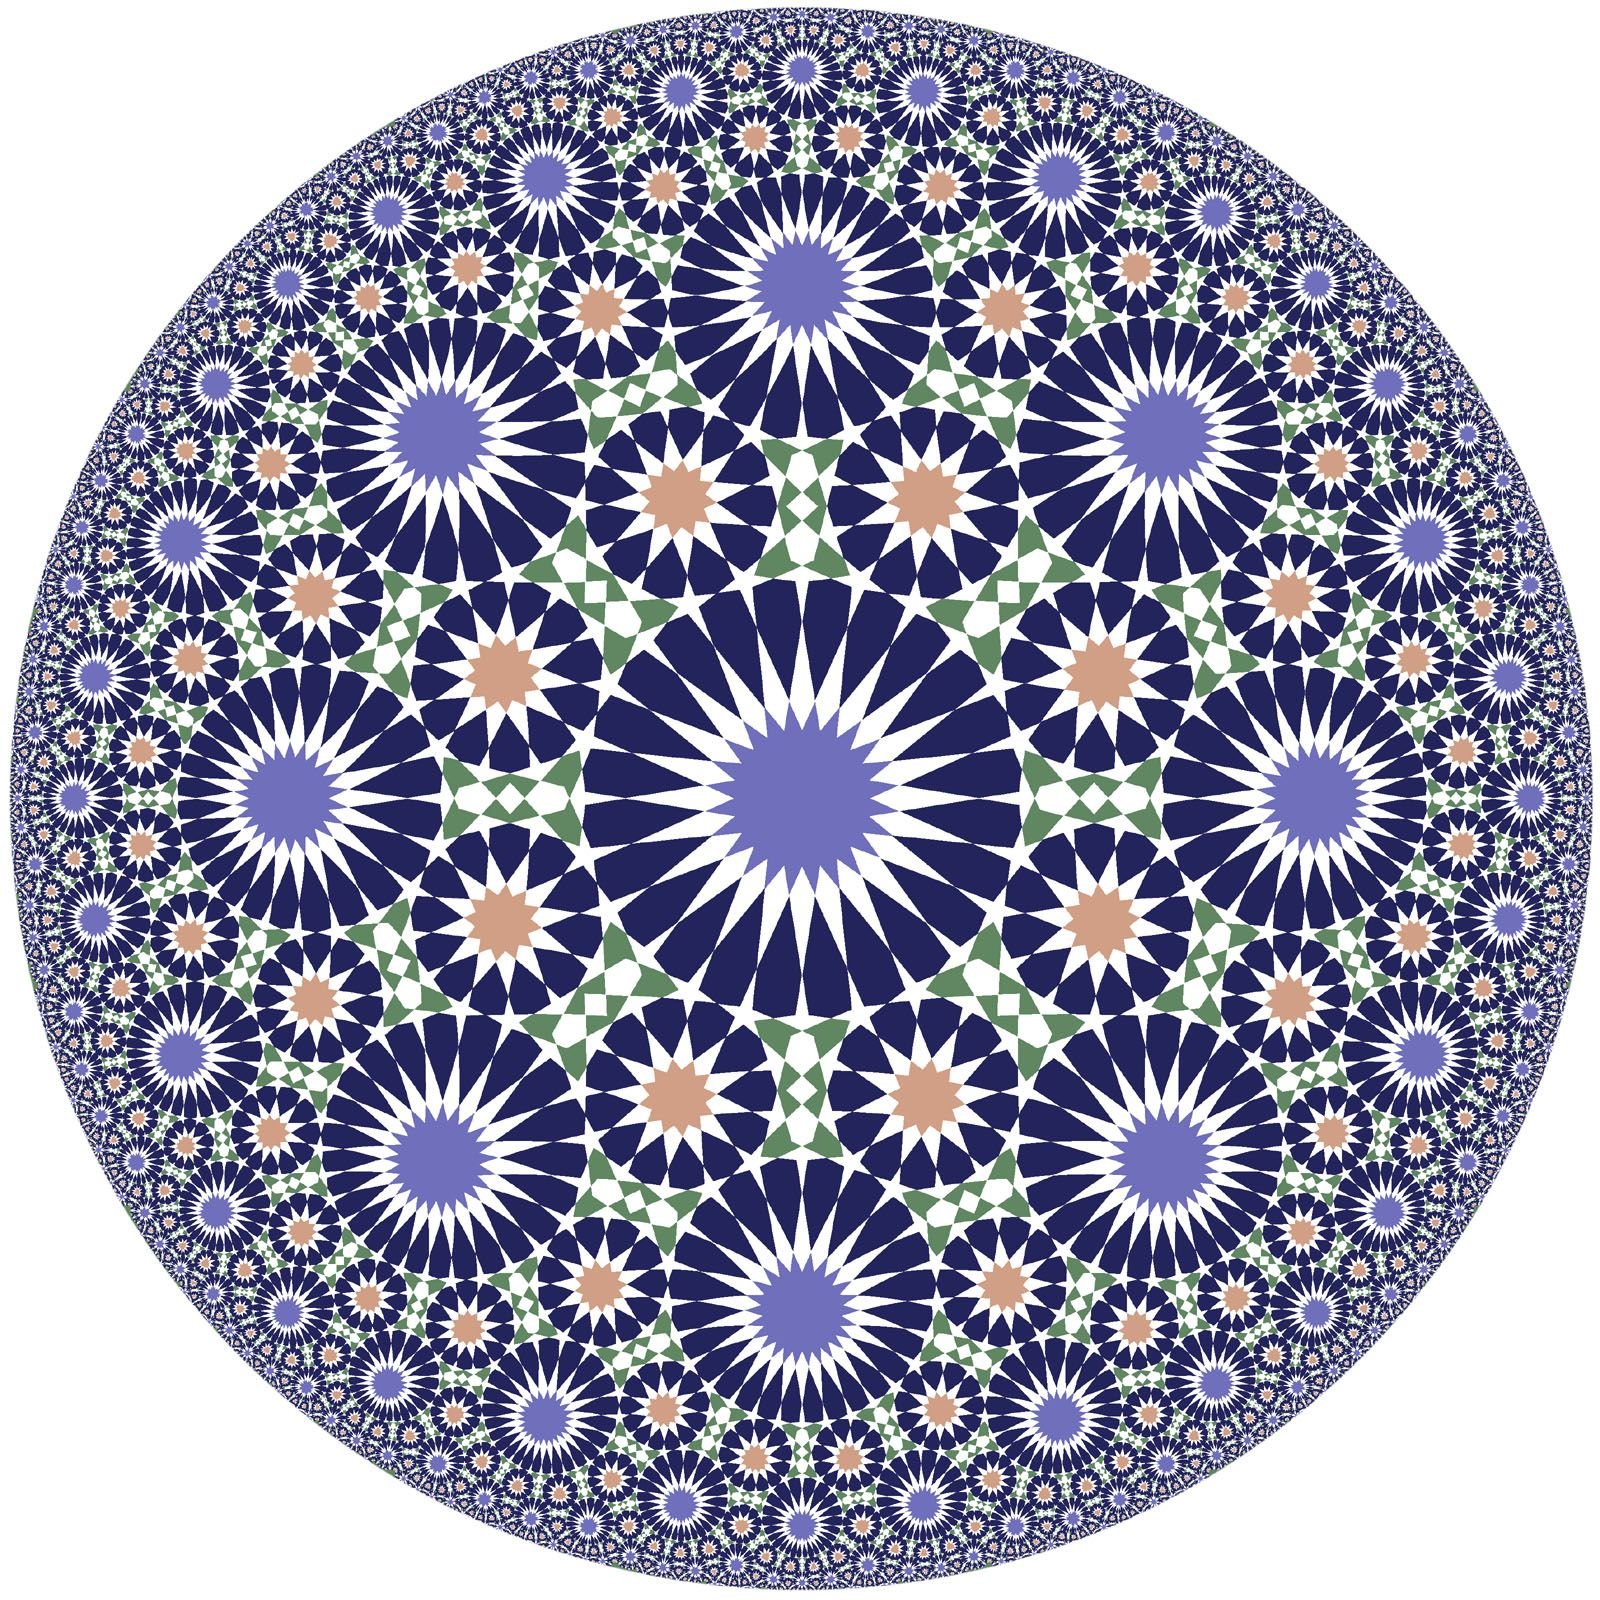 Round art. Геометрический орнамент. Арабский геометрический орнамент. Мандала геометрический узор. Круглые геометрические узоры.